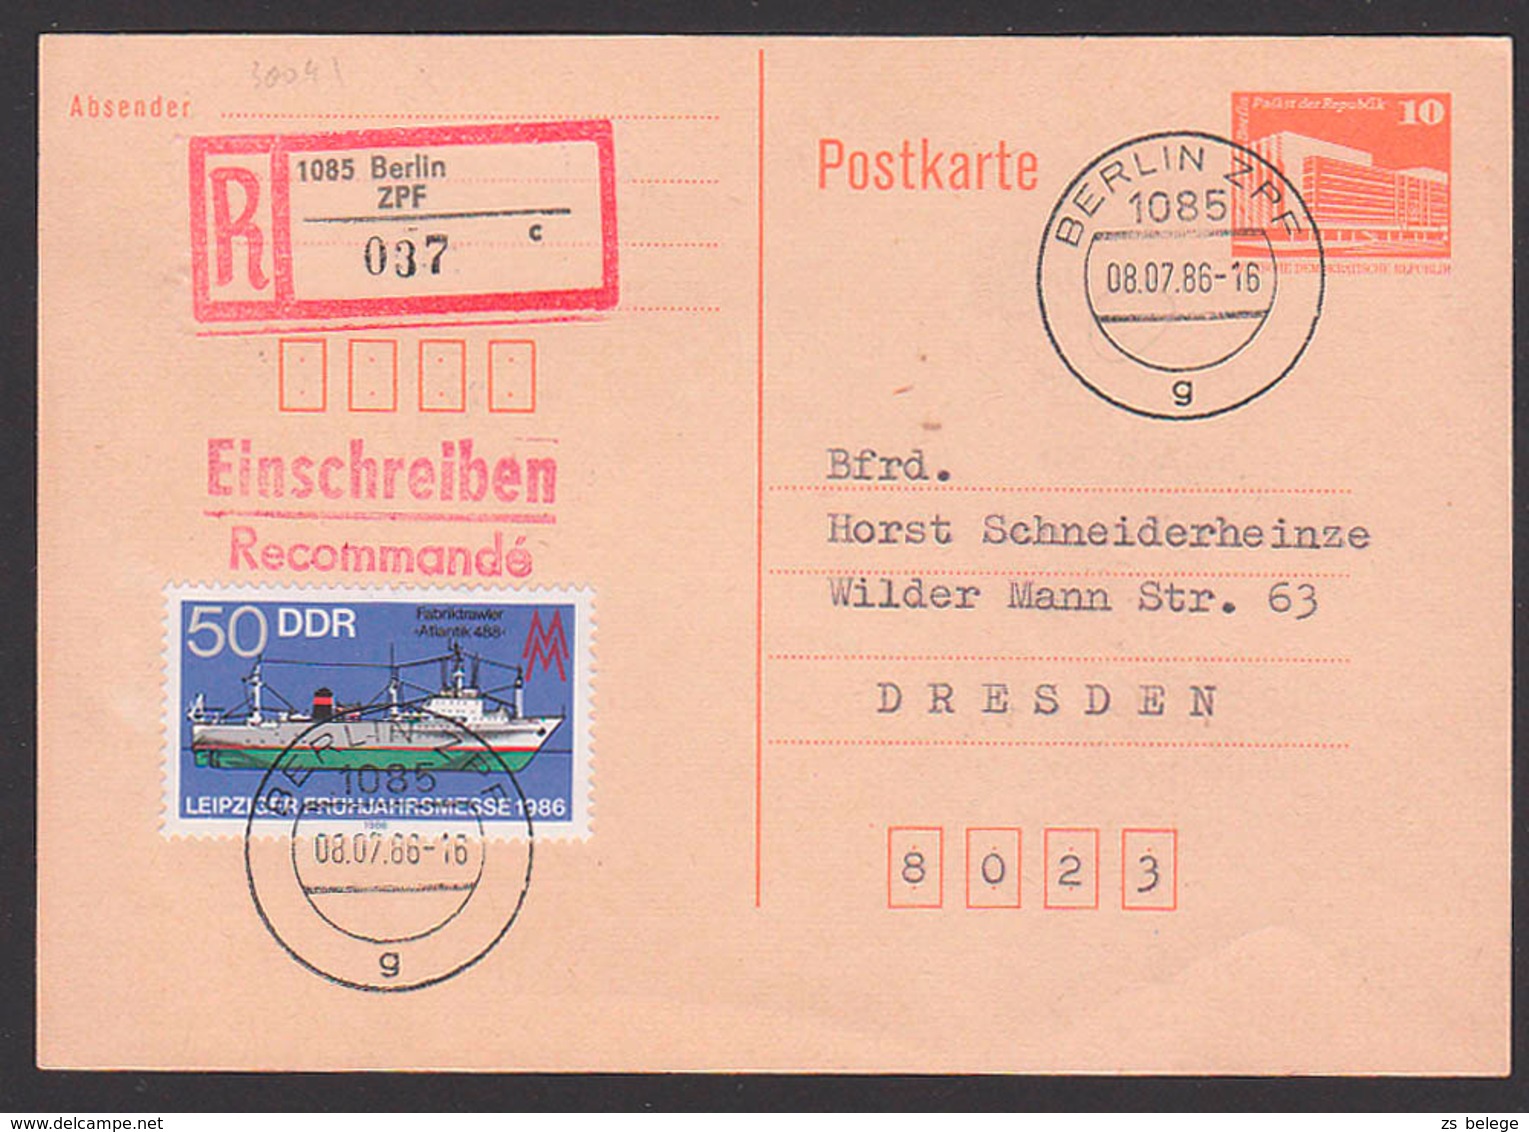 Berlin ZPF 8.7.86 10 Pf. Ganzsache Mit 50 Pfg. "Fabriktrawler Atlantik 488" DDR3004, Portogenau, Leipziger Messe 1986 - Postcards - Used